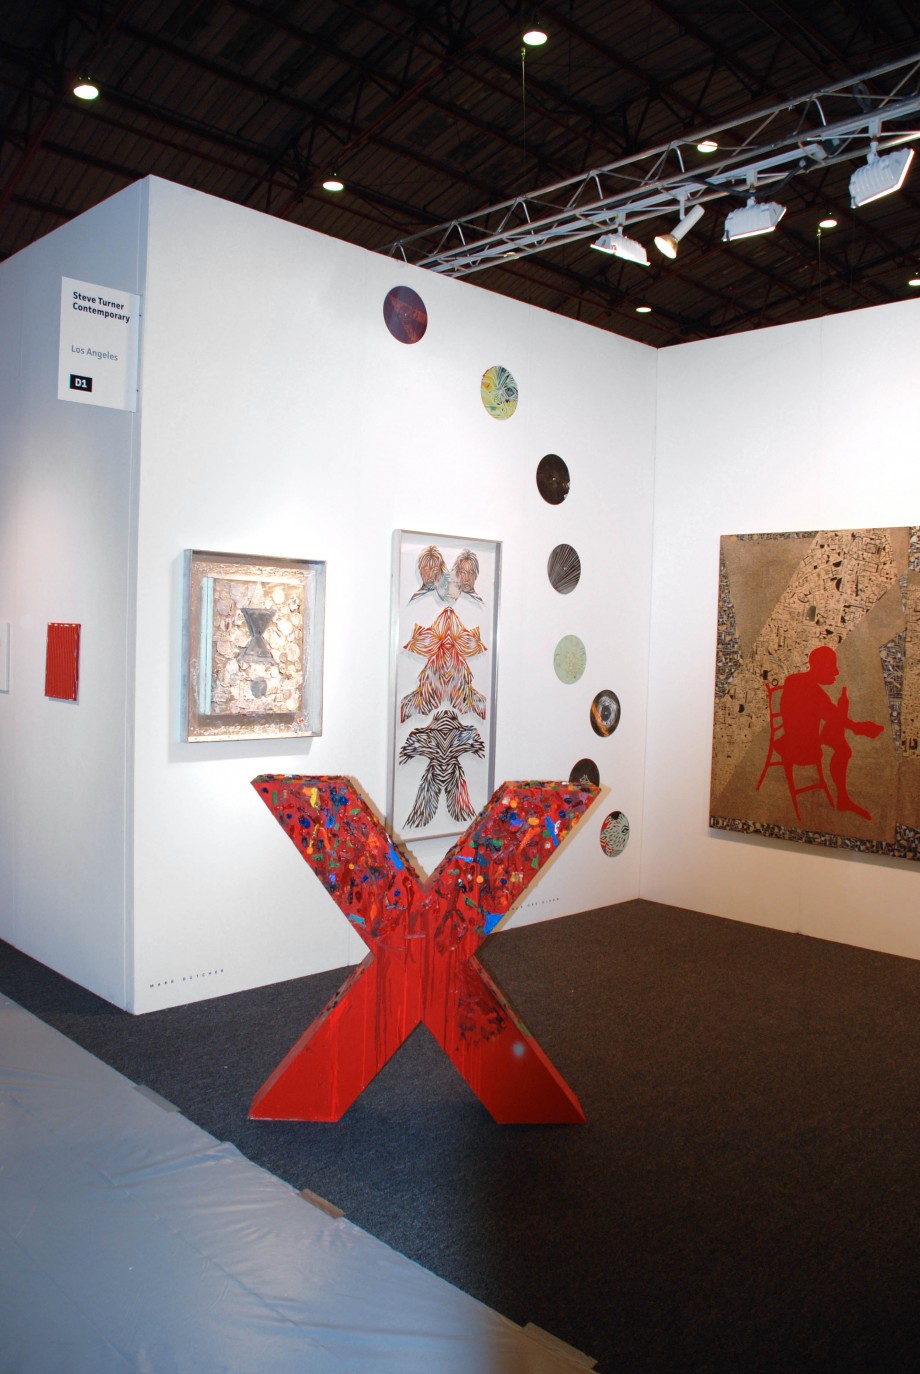 Installation View featuring work by Mark Dutcher, Eamon Ore-Giron and Deborah Grant at artLA 2009